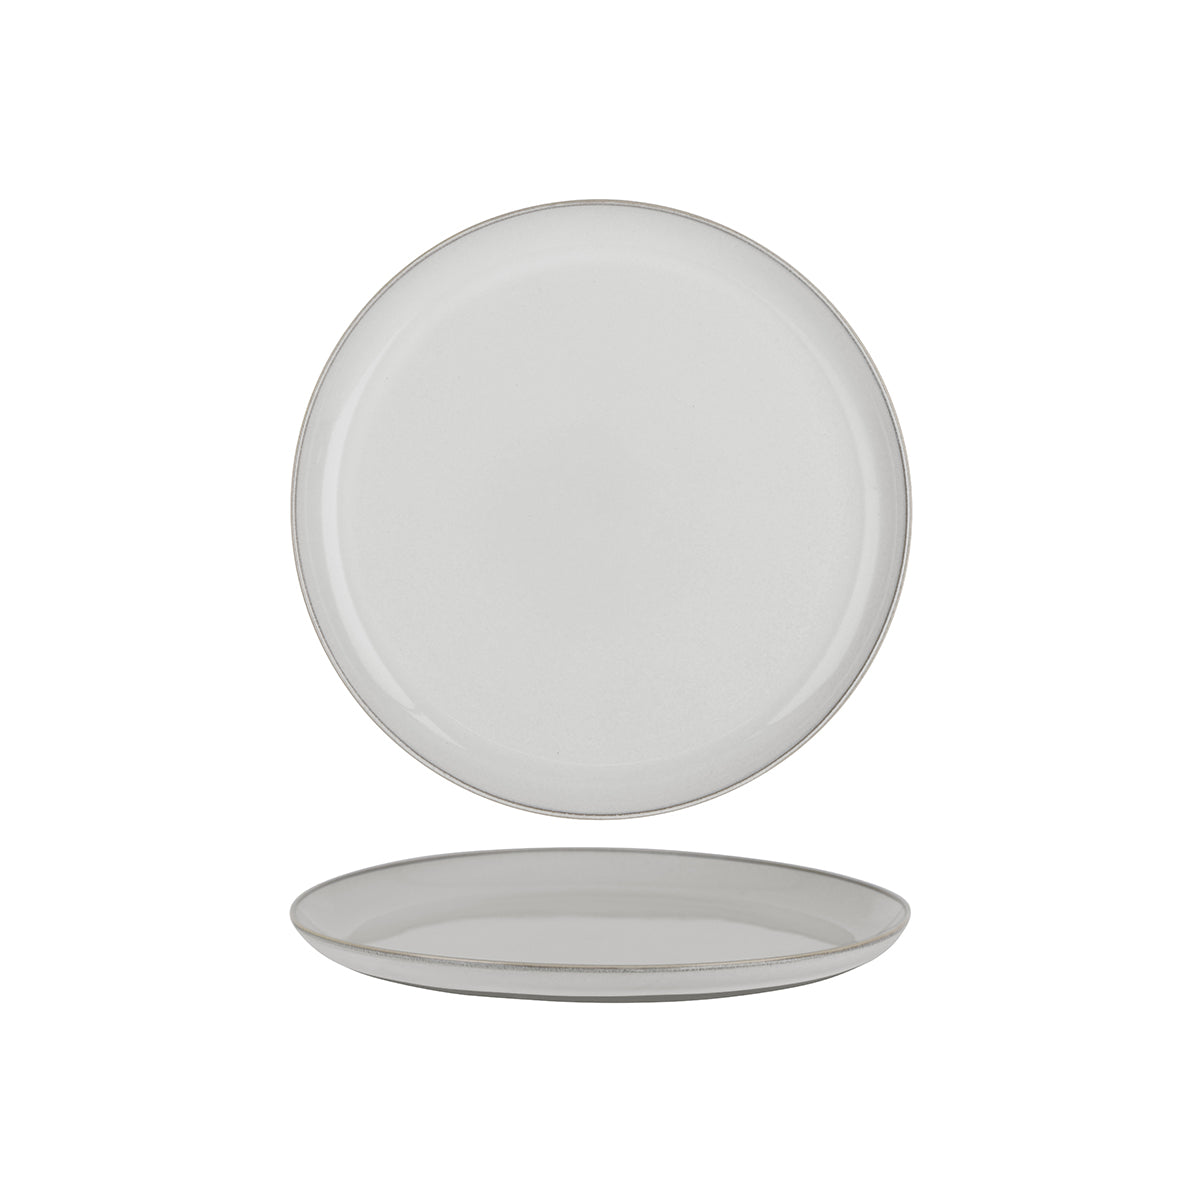 SERAXB5119106 Serax Serax Terres De Reves White Round Plate 260mm Tomkin Australia Hospitality Supplies